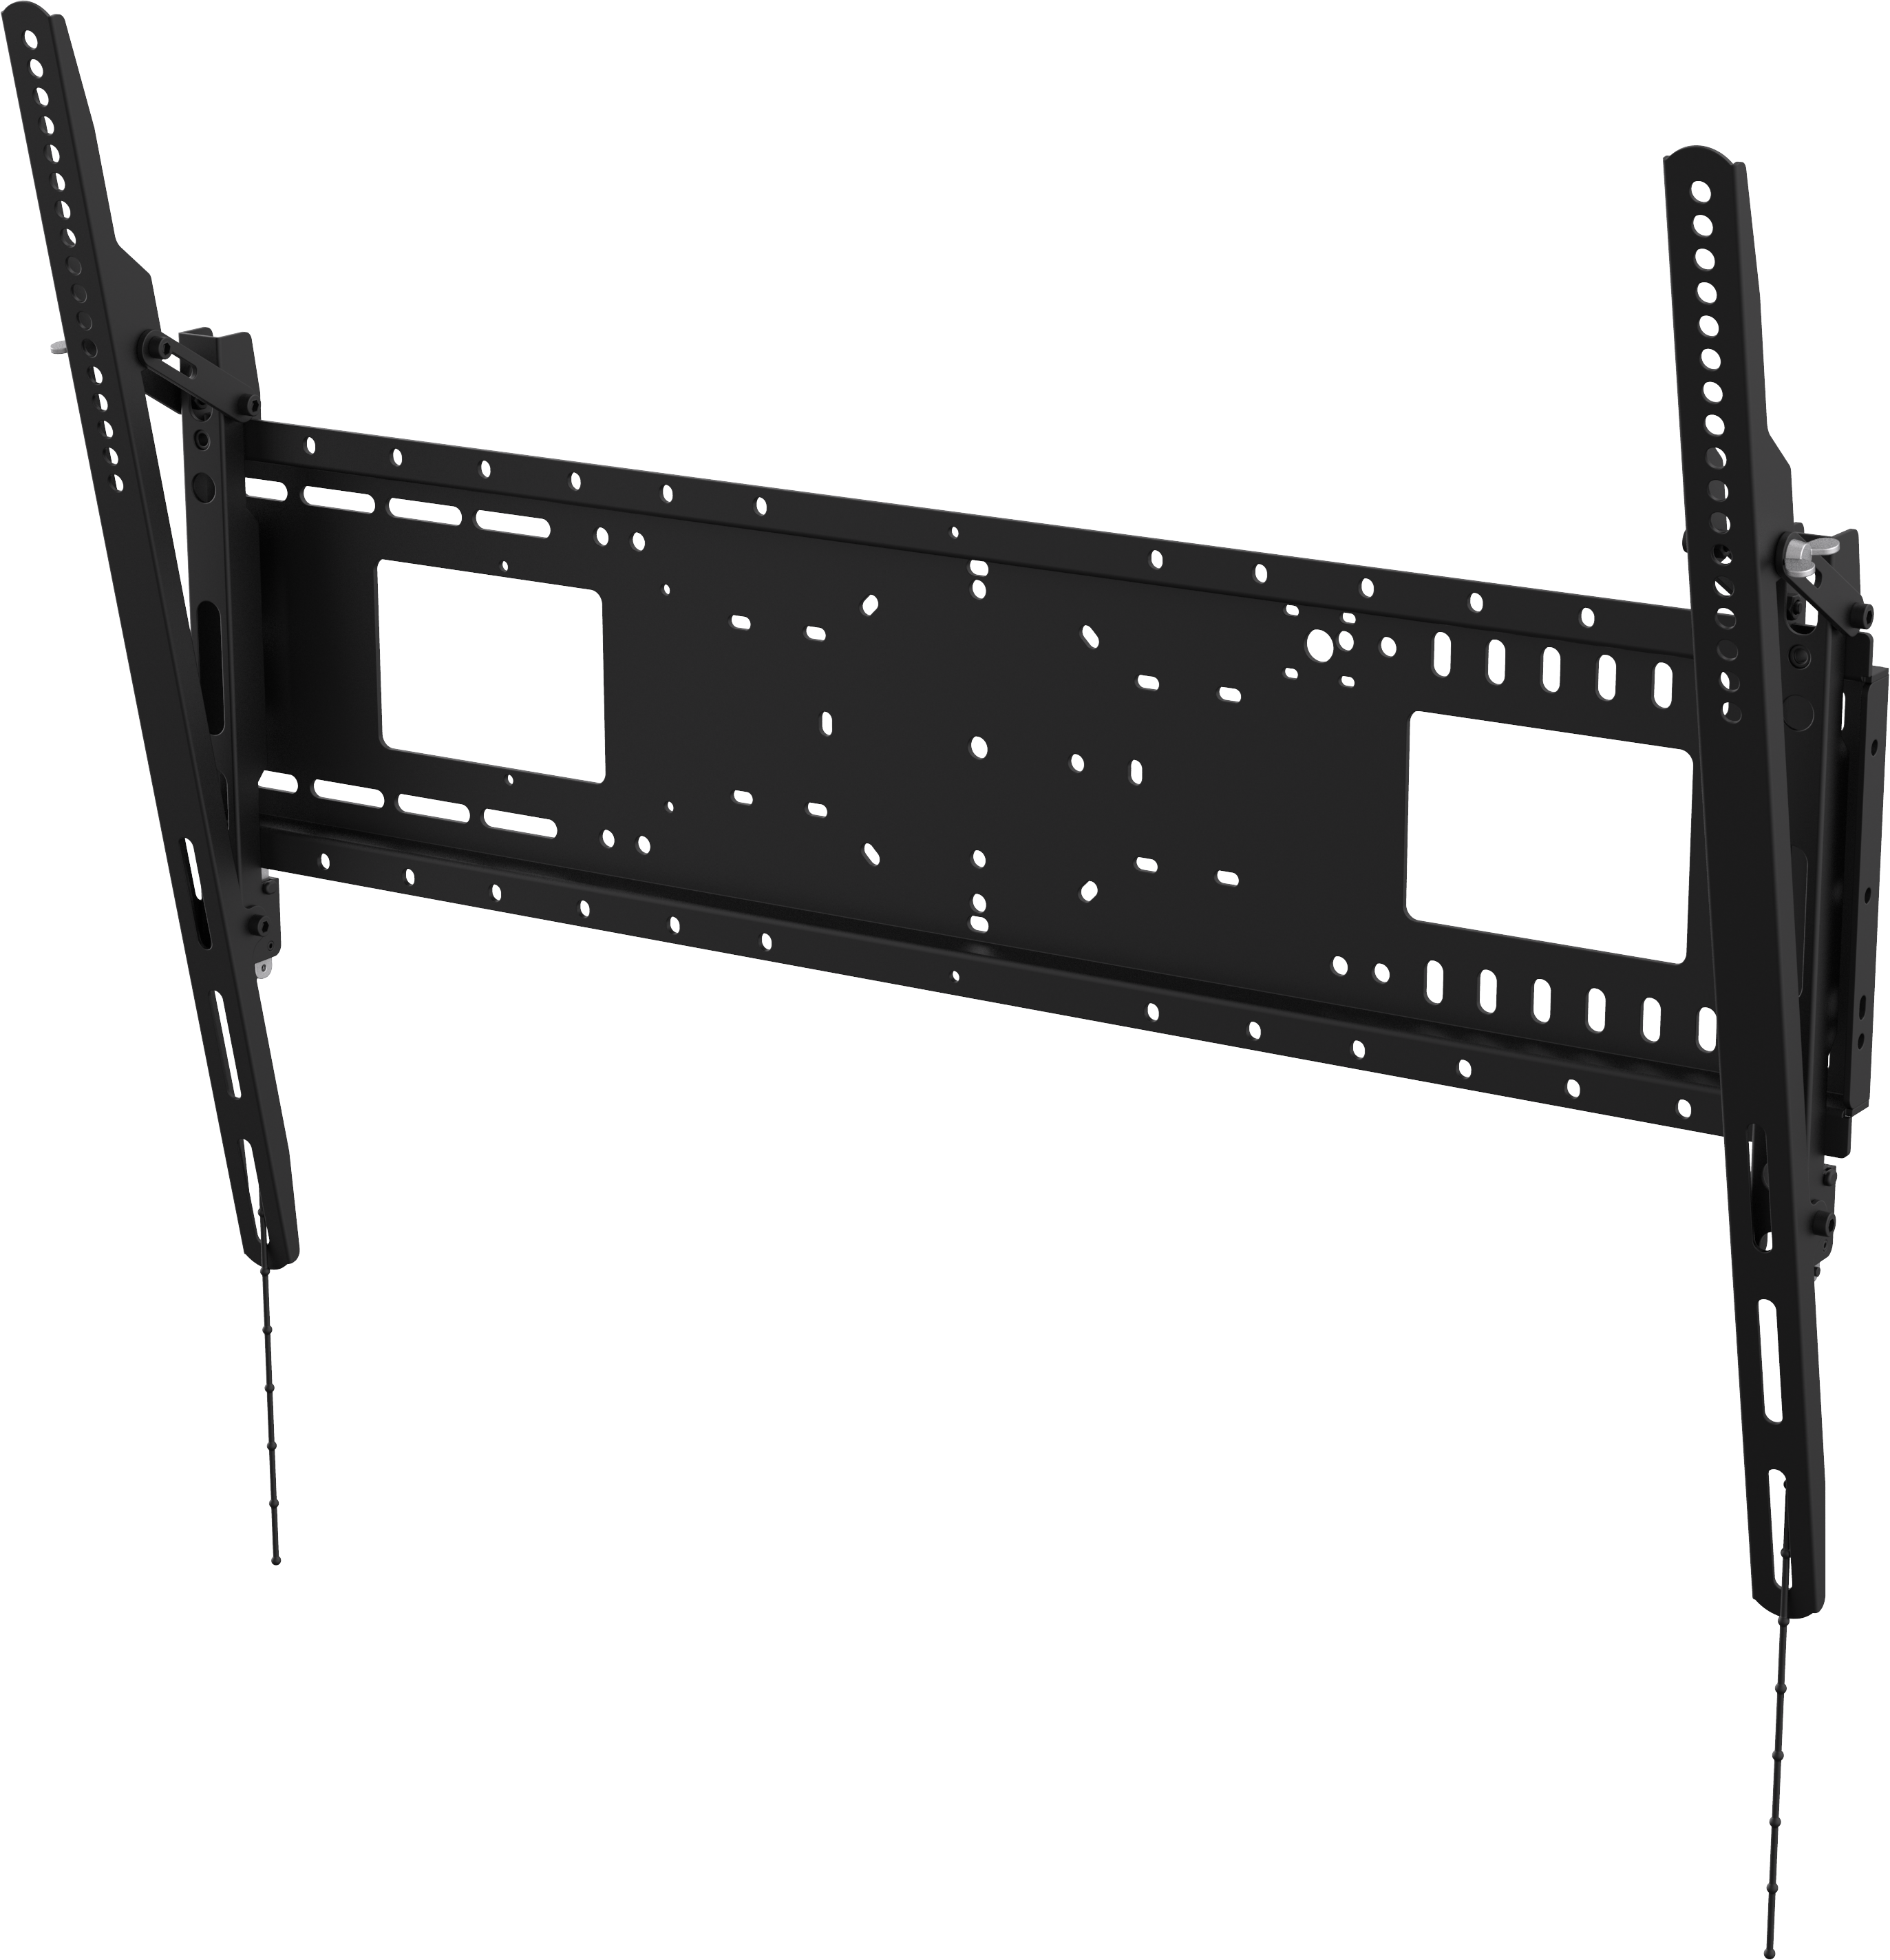 An image showing Robuuste kantelbare wandbeugel voor flatscreens 800 × 600